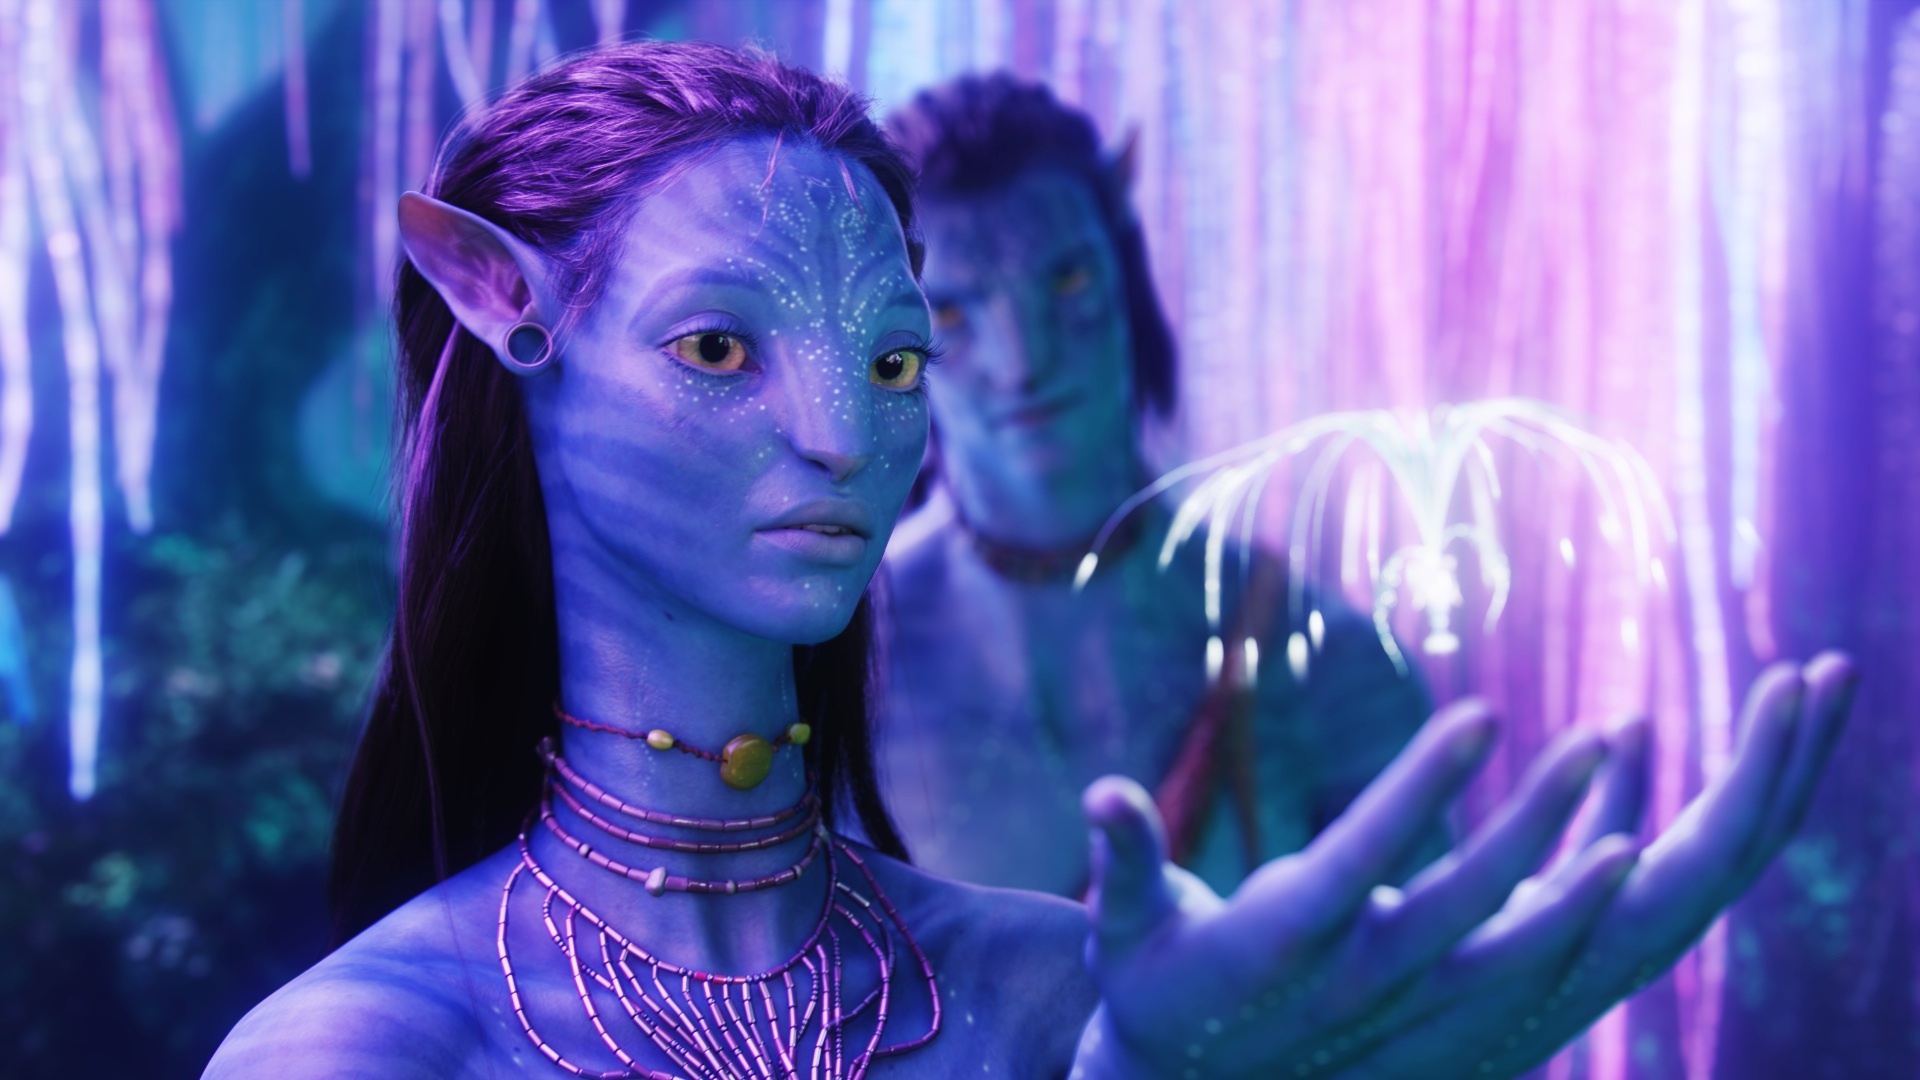 Zoe Saldana and Sam Worthington in Avatar (2009)